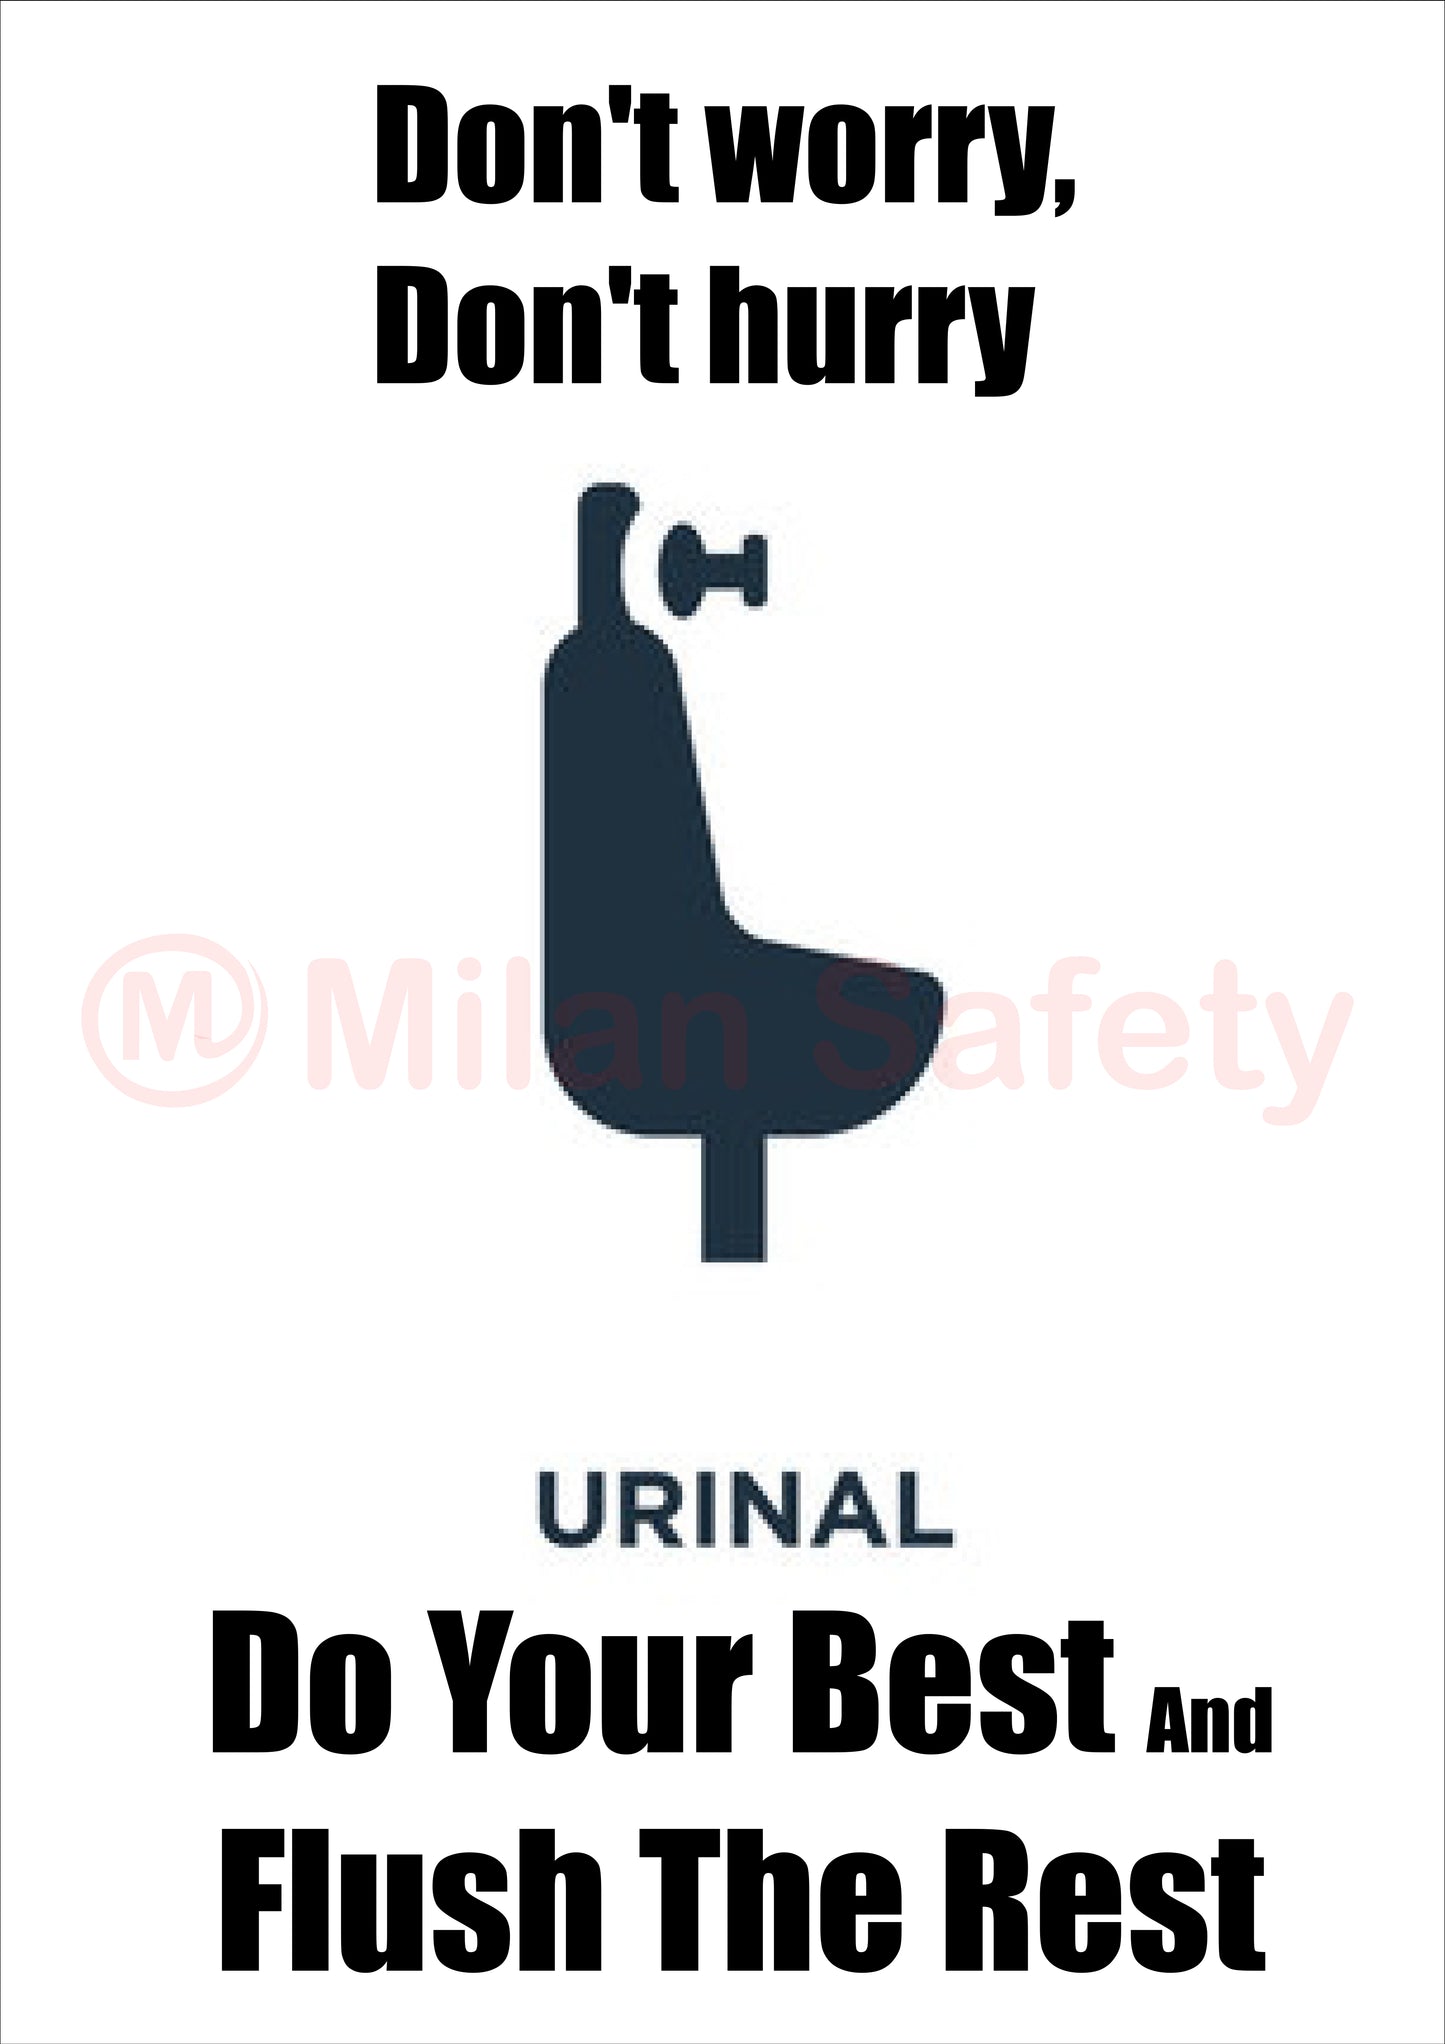 Urinal signage